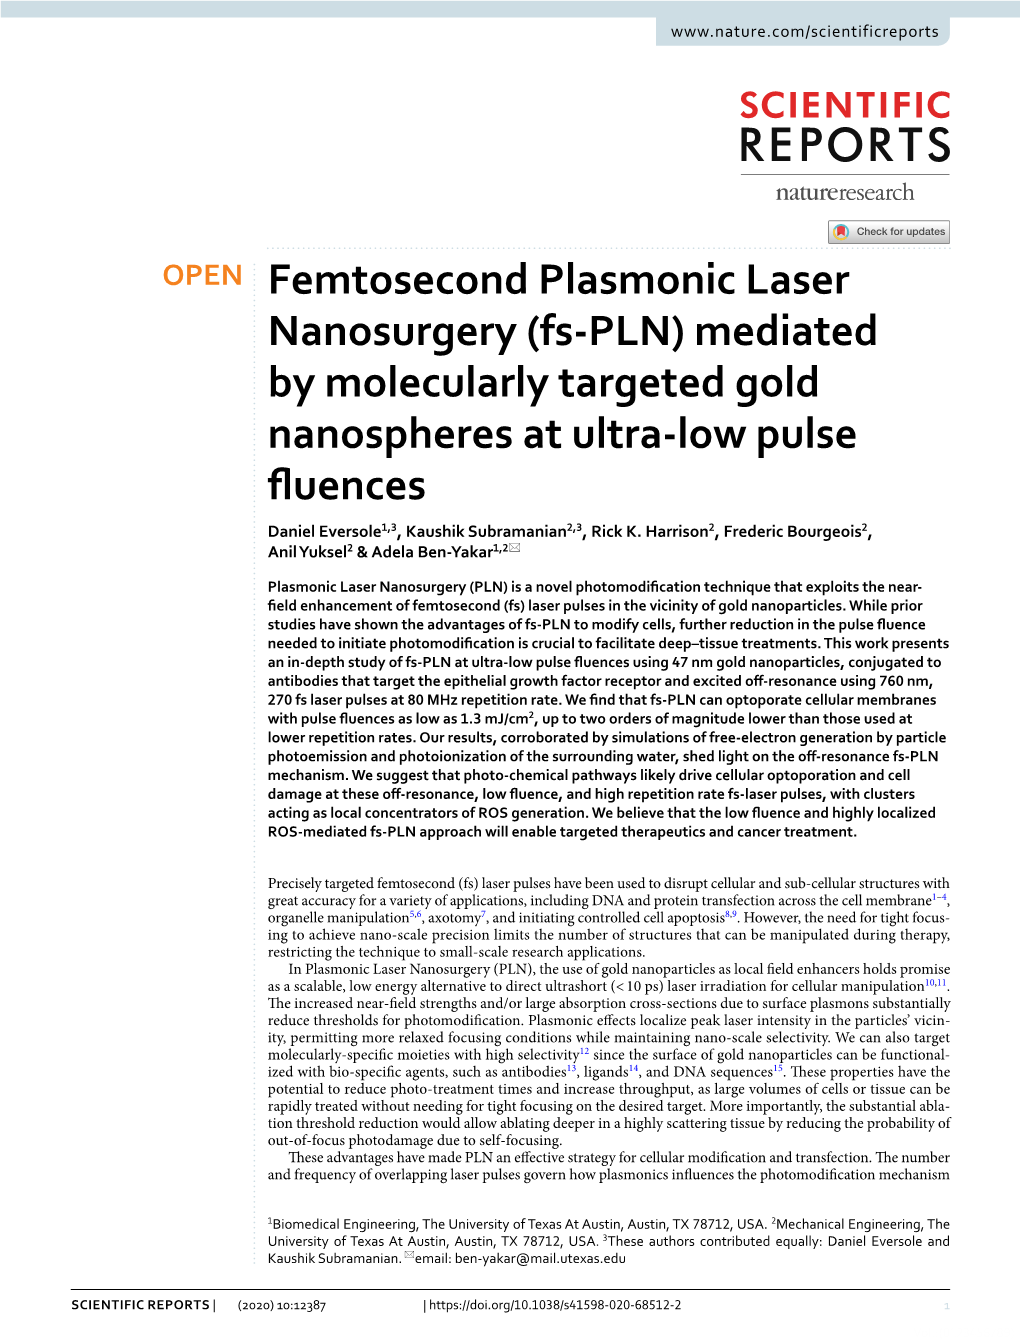 Femtosecond Plasmonic Laser Nanosurgery (Fs-PLN) Mediated by Molecularly Targeted Gold Nanospheres at Ultra-Low Pulse Fluences